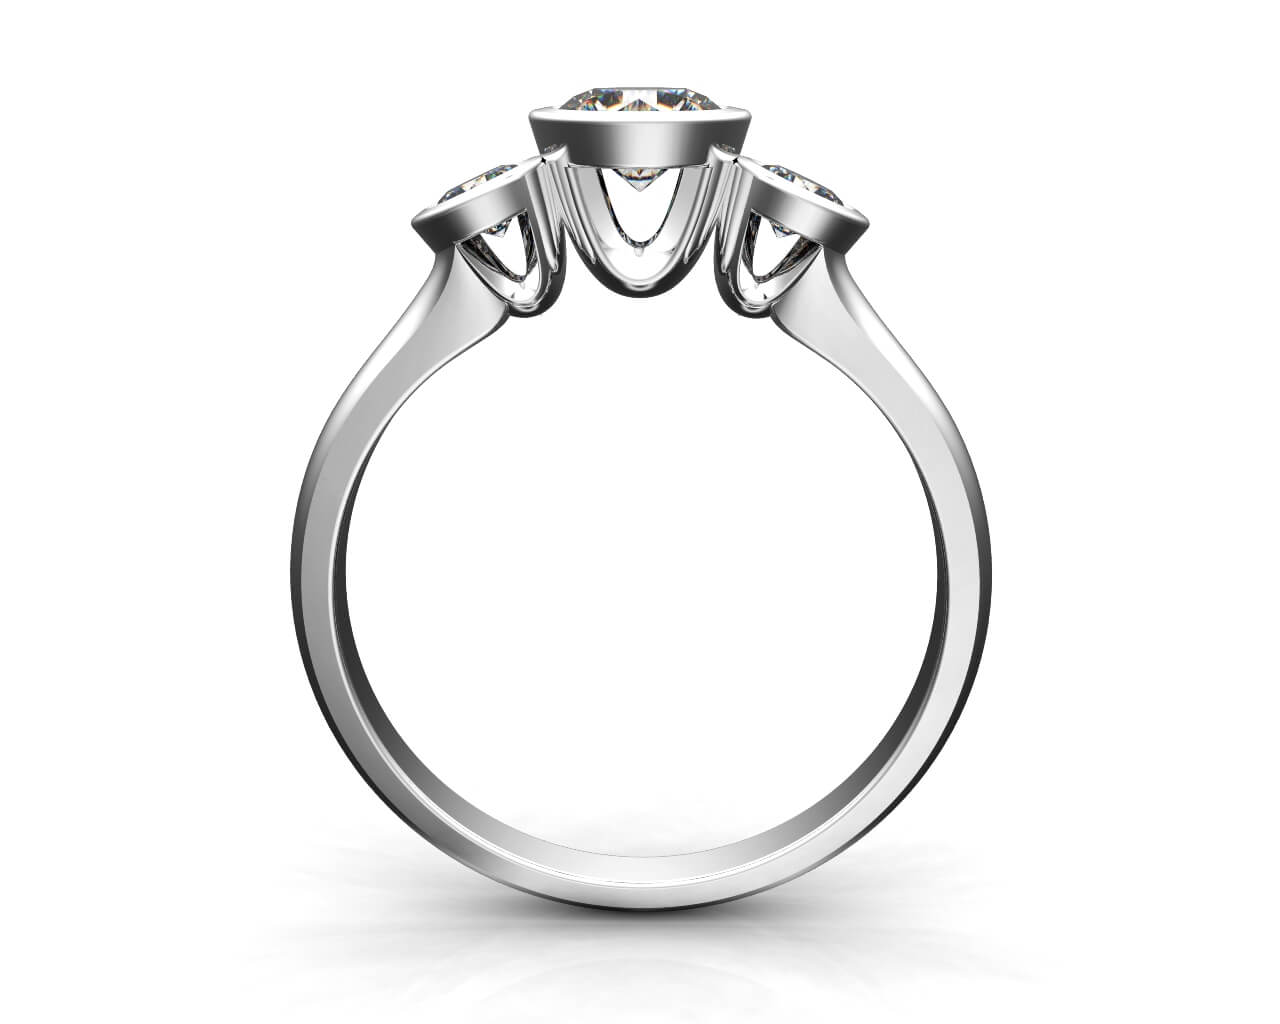 Round Brilliant Cut Diamond Trilogy Engagement Ring, Bezel Set Stones on a Thin Plain Polished Band.